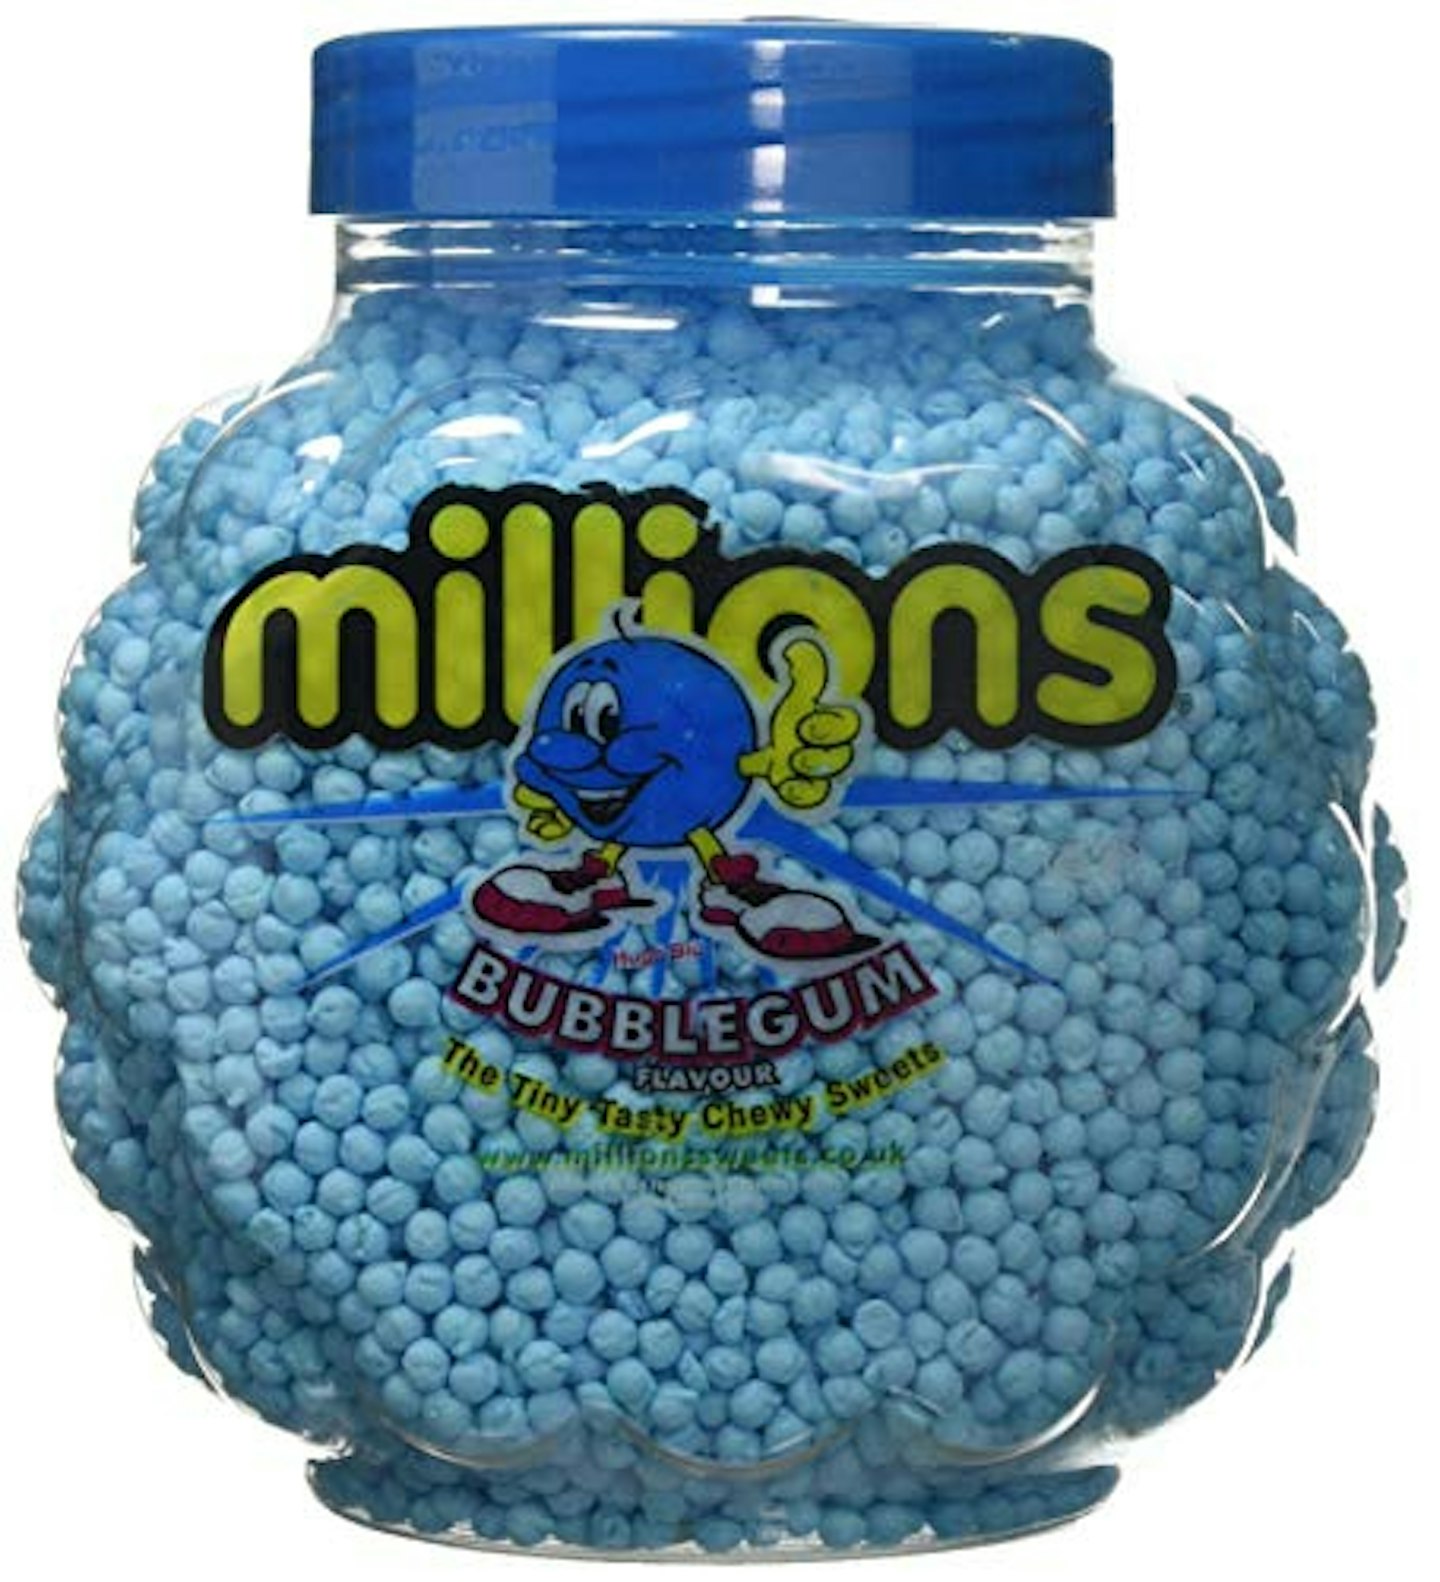 Millions Bubblegum 